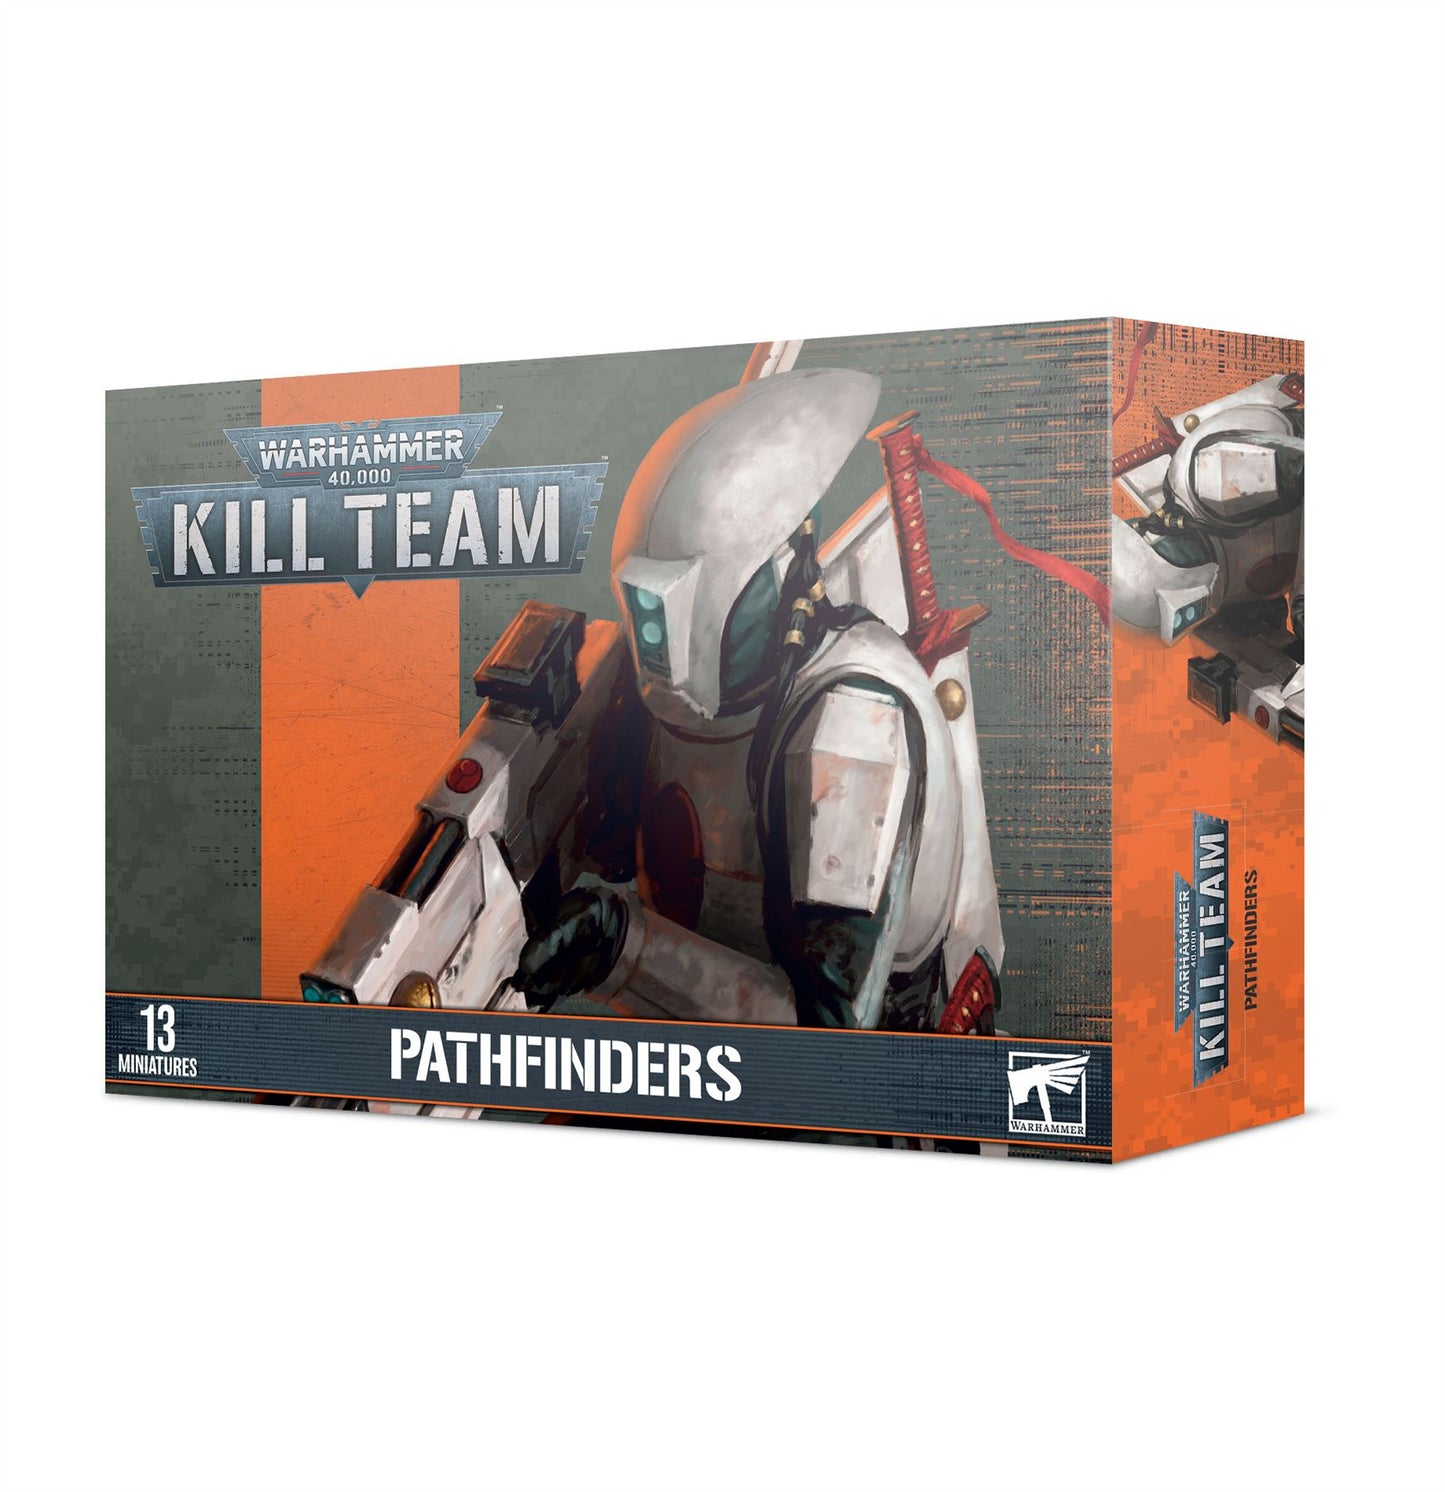 Pathfinders - Warhammer 40K Kill Team #1HI